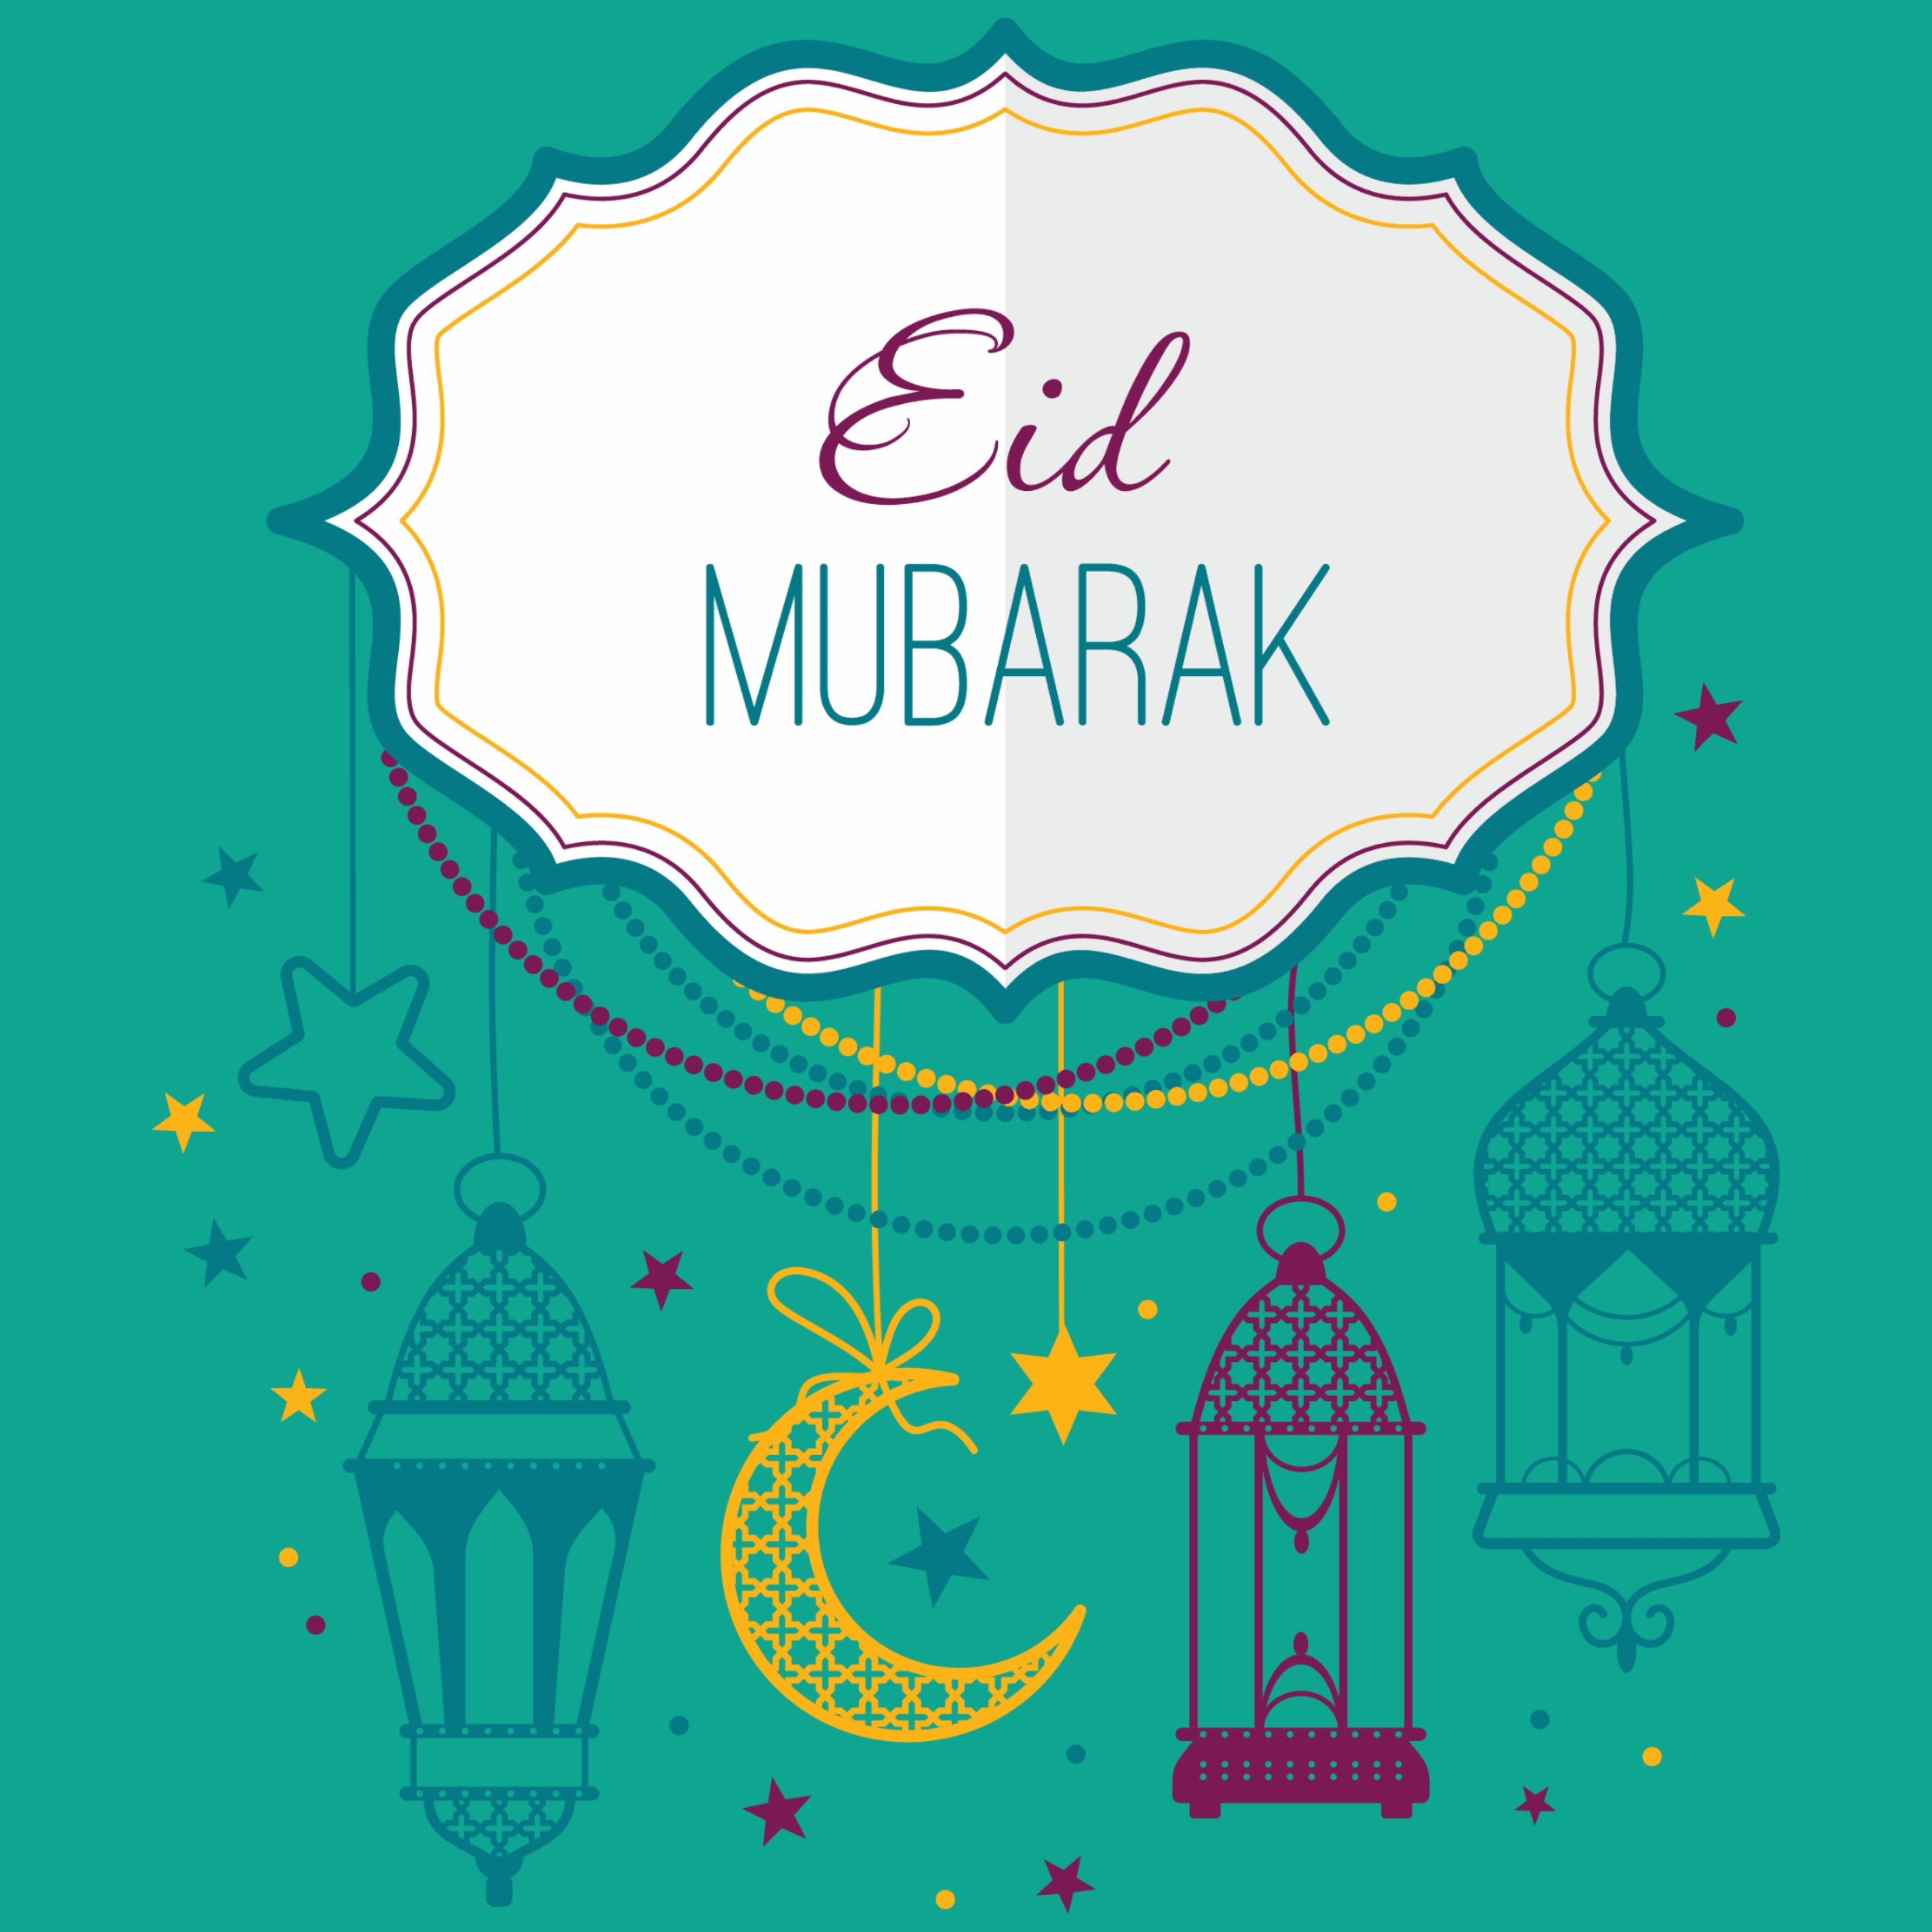 Eid Mubarak Islamic Green Wallpaper with Shining Moon Lantern Lamp and  Floral Ornaments Stock Vector  Illustration of arabic decorative  183394105